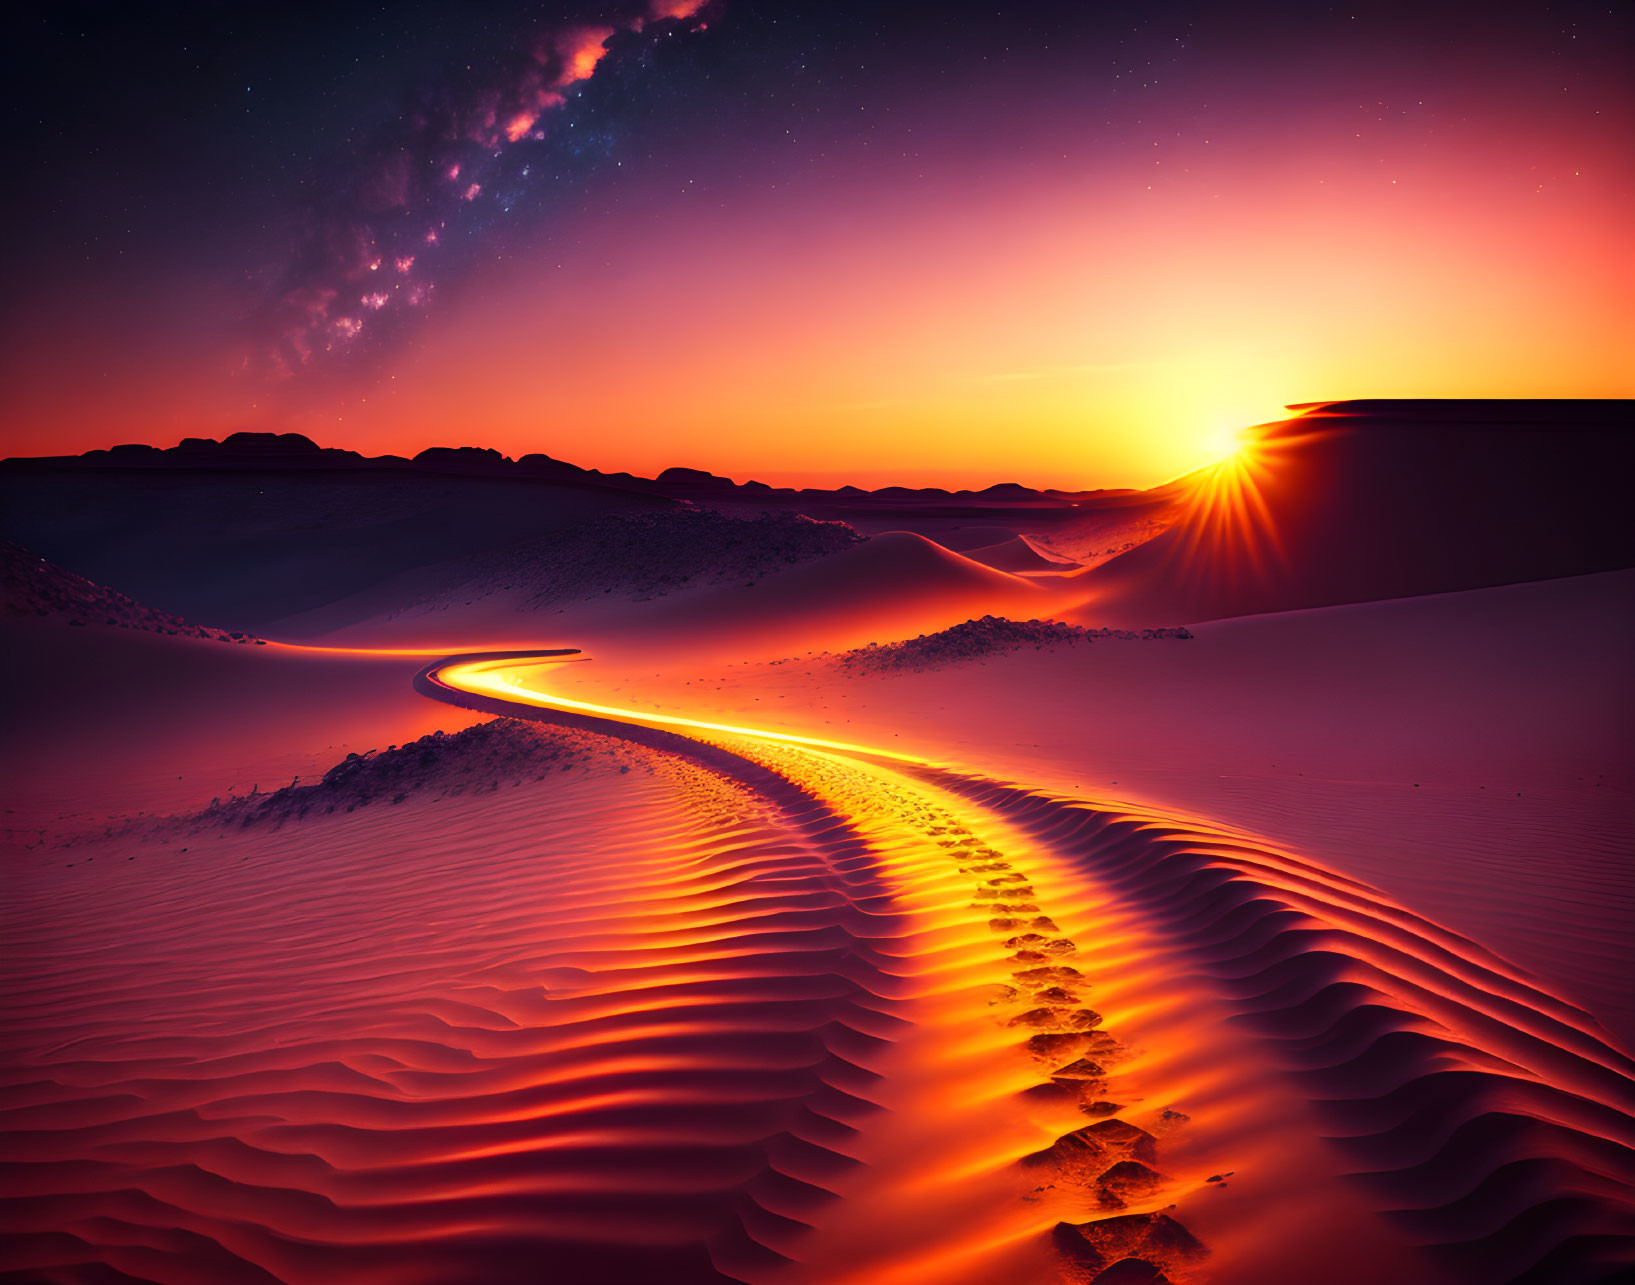 Vibrant orange desert sunset with vehicle tracks and footprints